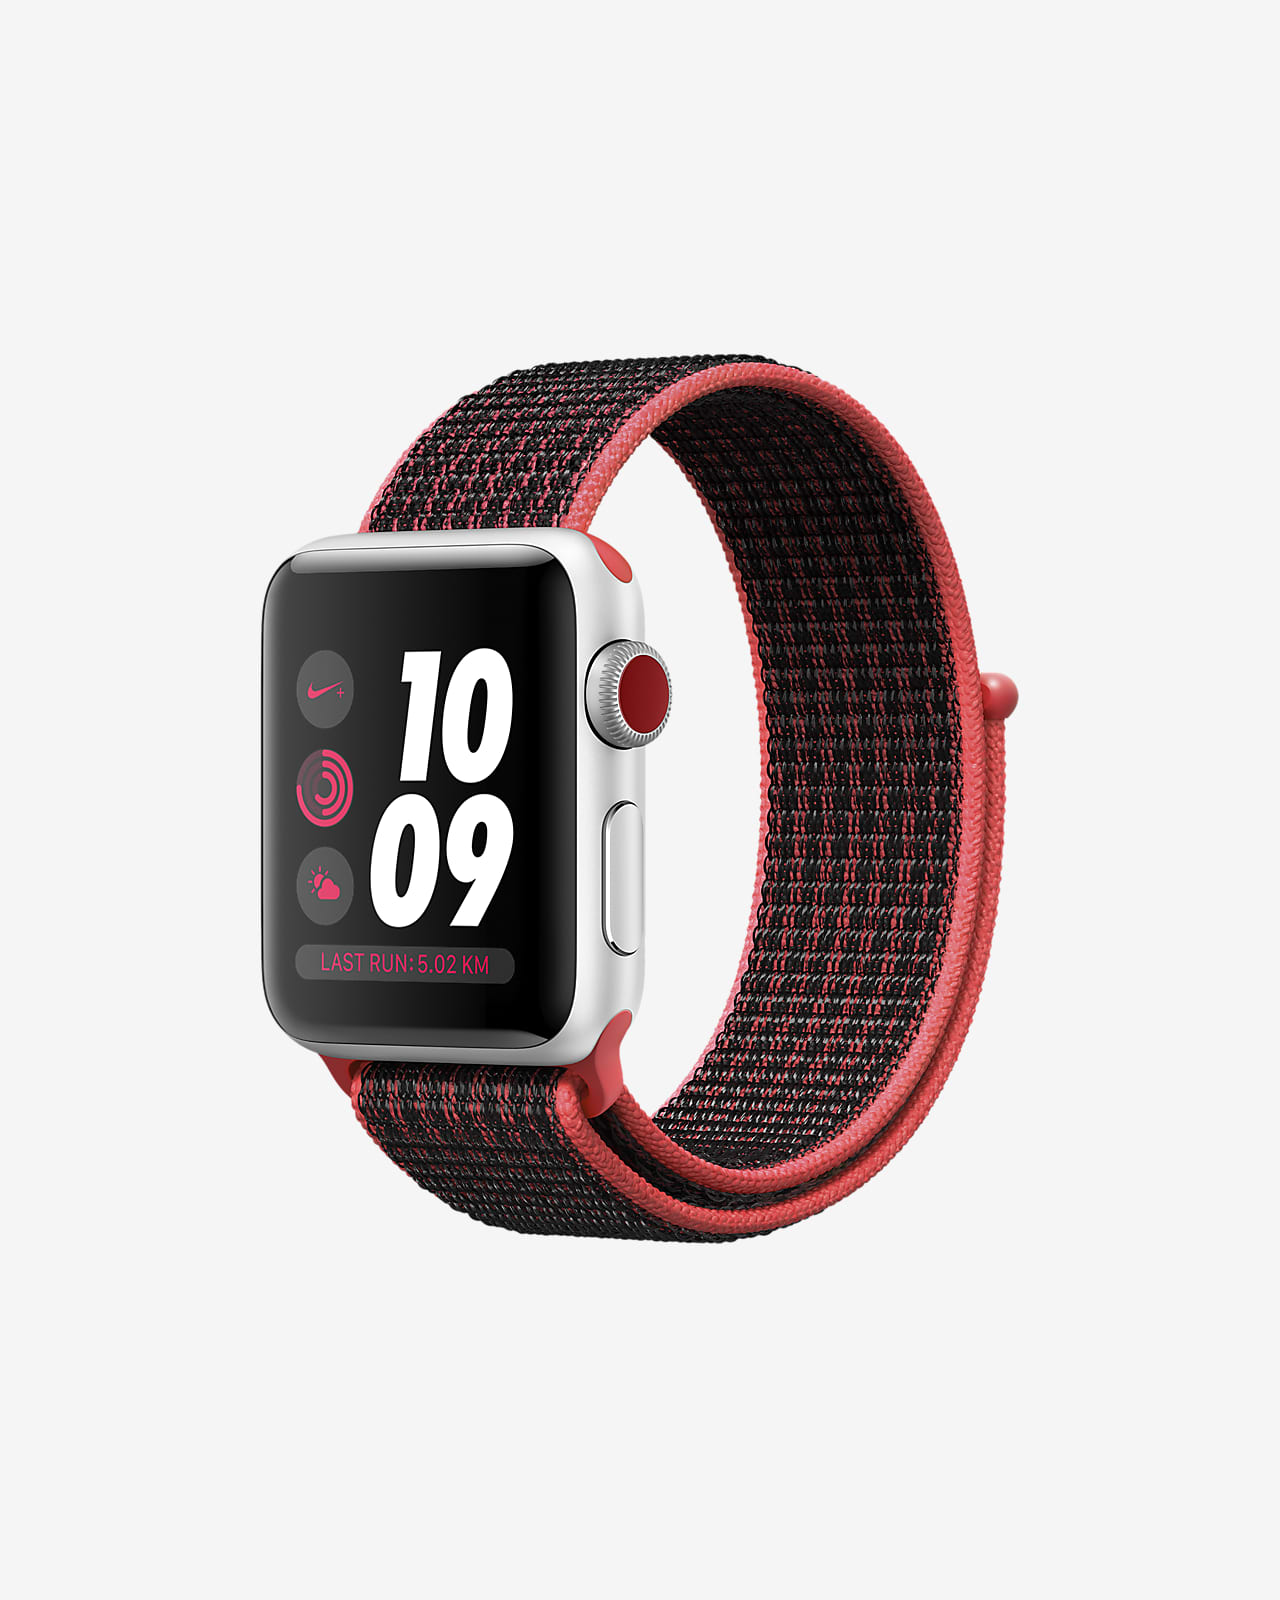 Apple Watch Nike+ Series 3 (GPS + Cellular) 38mm Open Box Running Watch